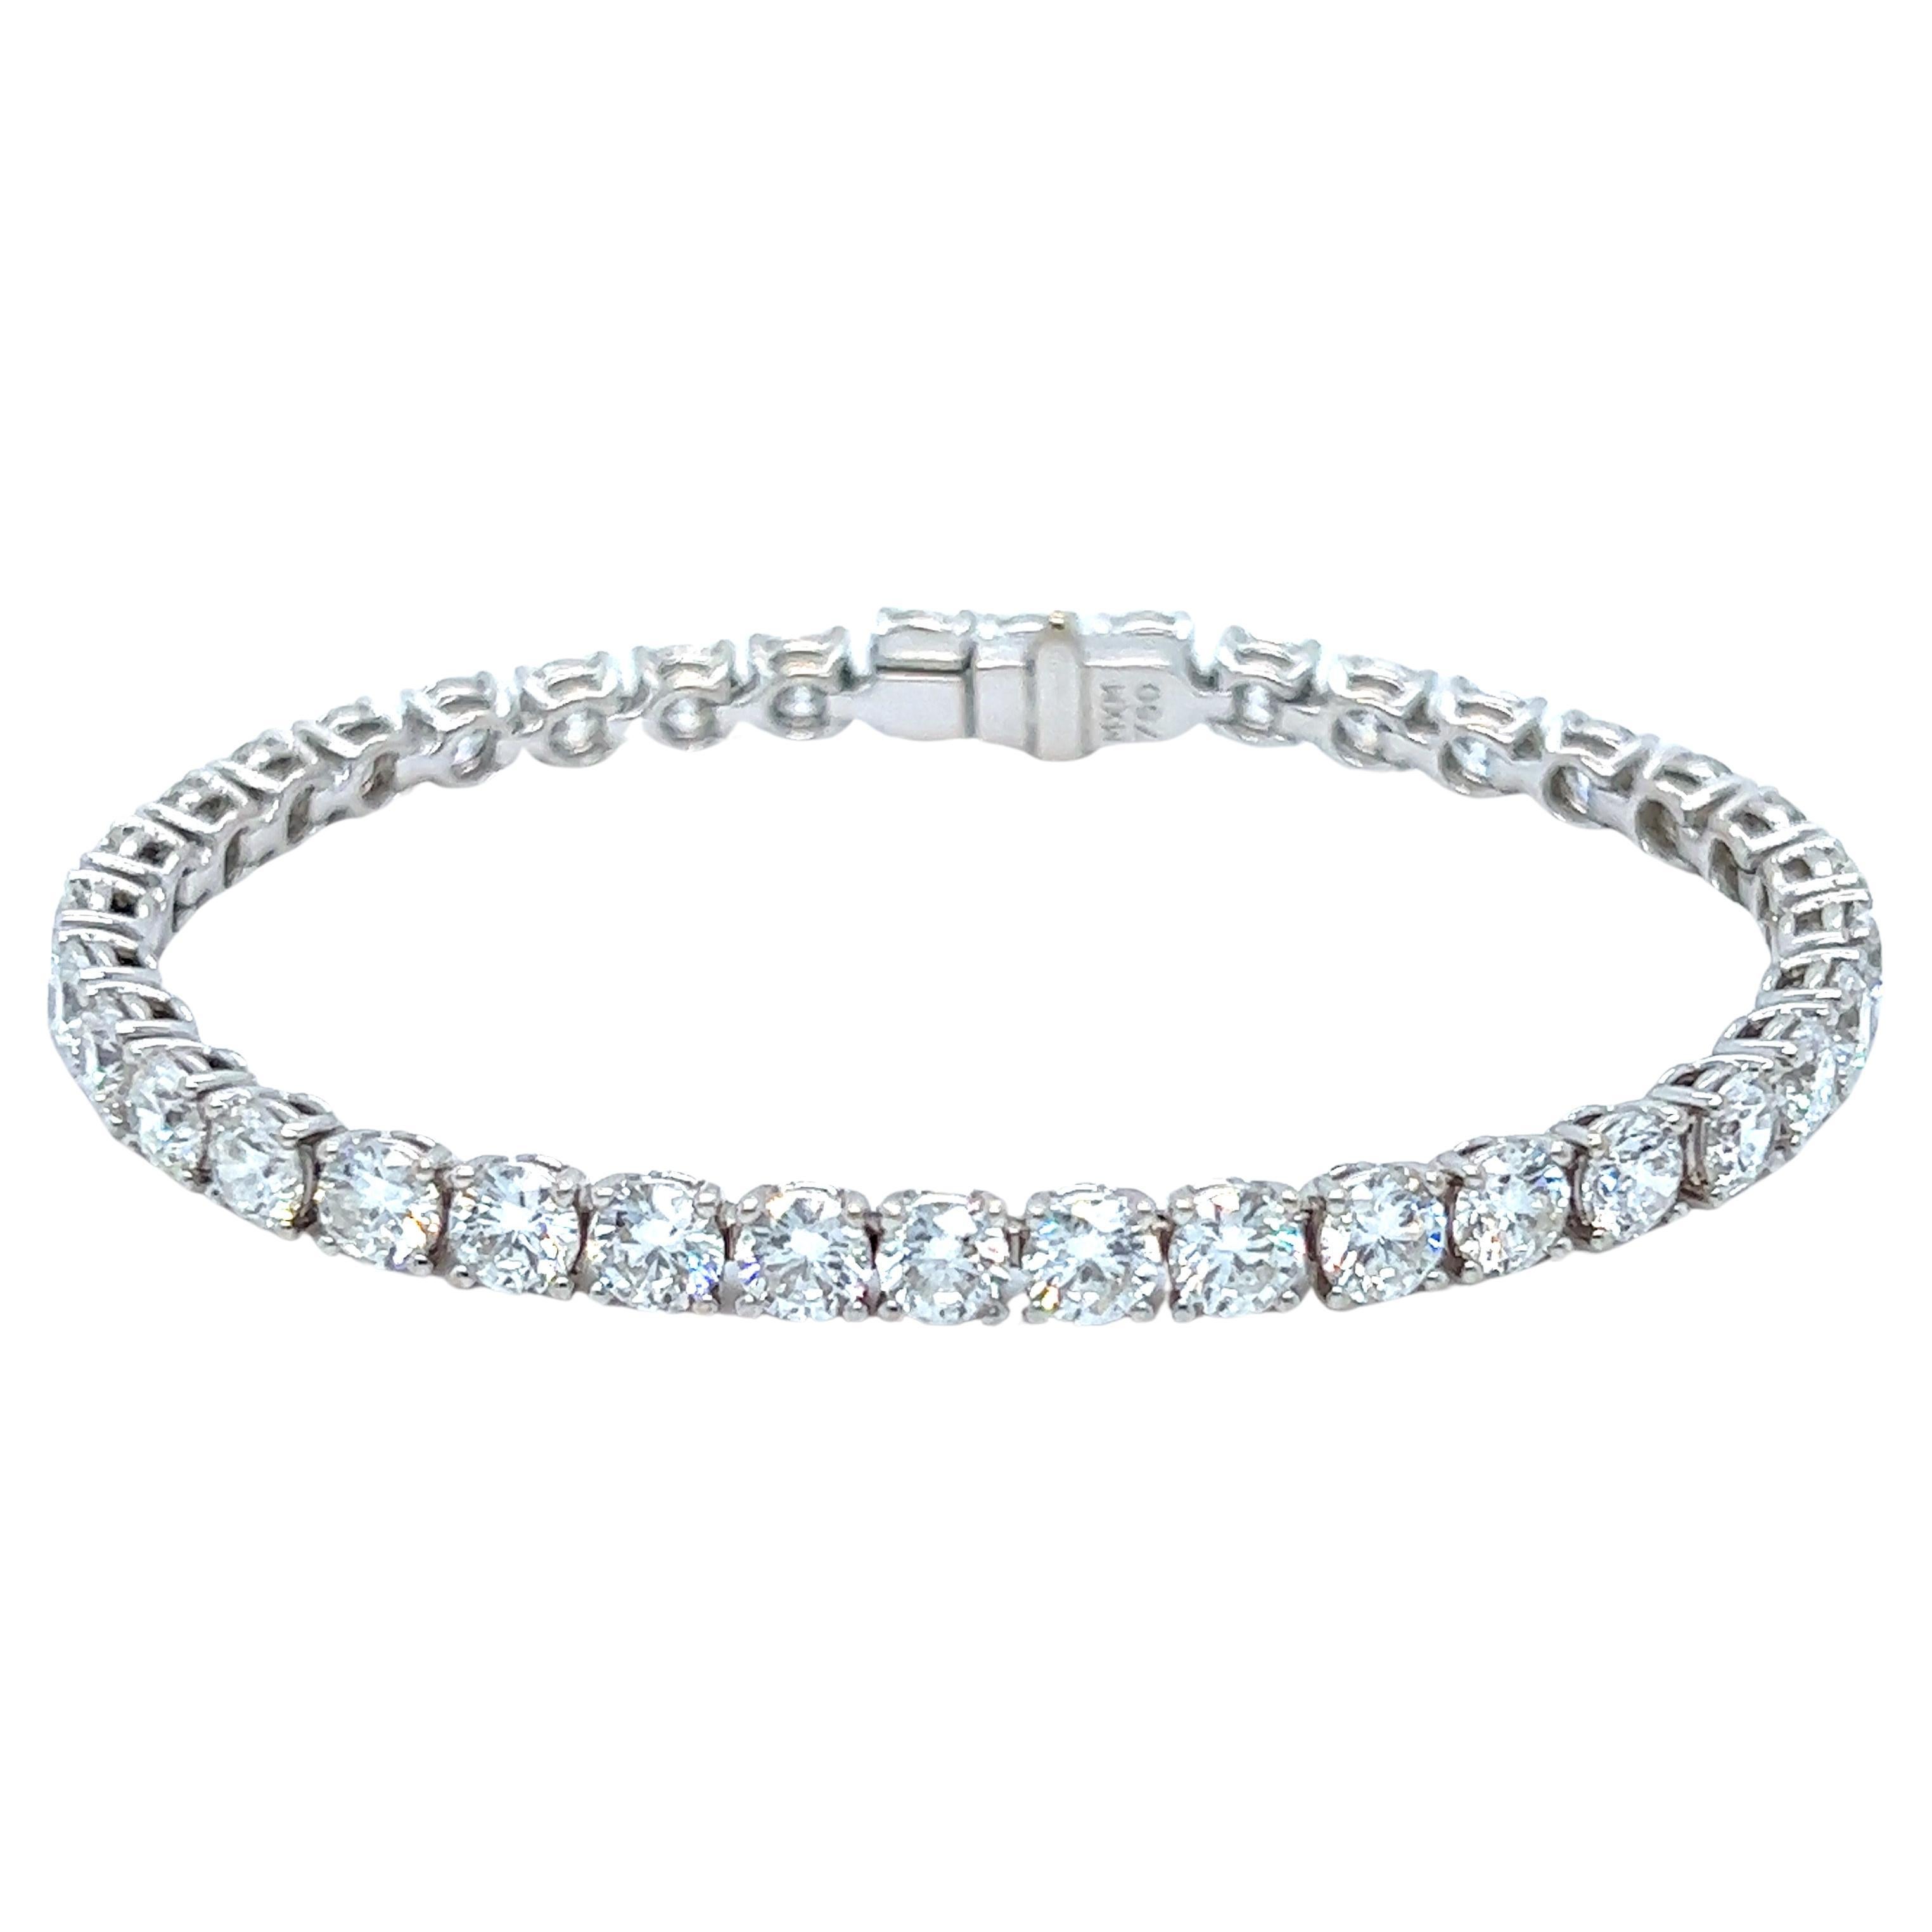 Statement High Quality 18K White Gold Diamond Tennis Line Bracelet - 10.73ct. For Sale